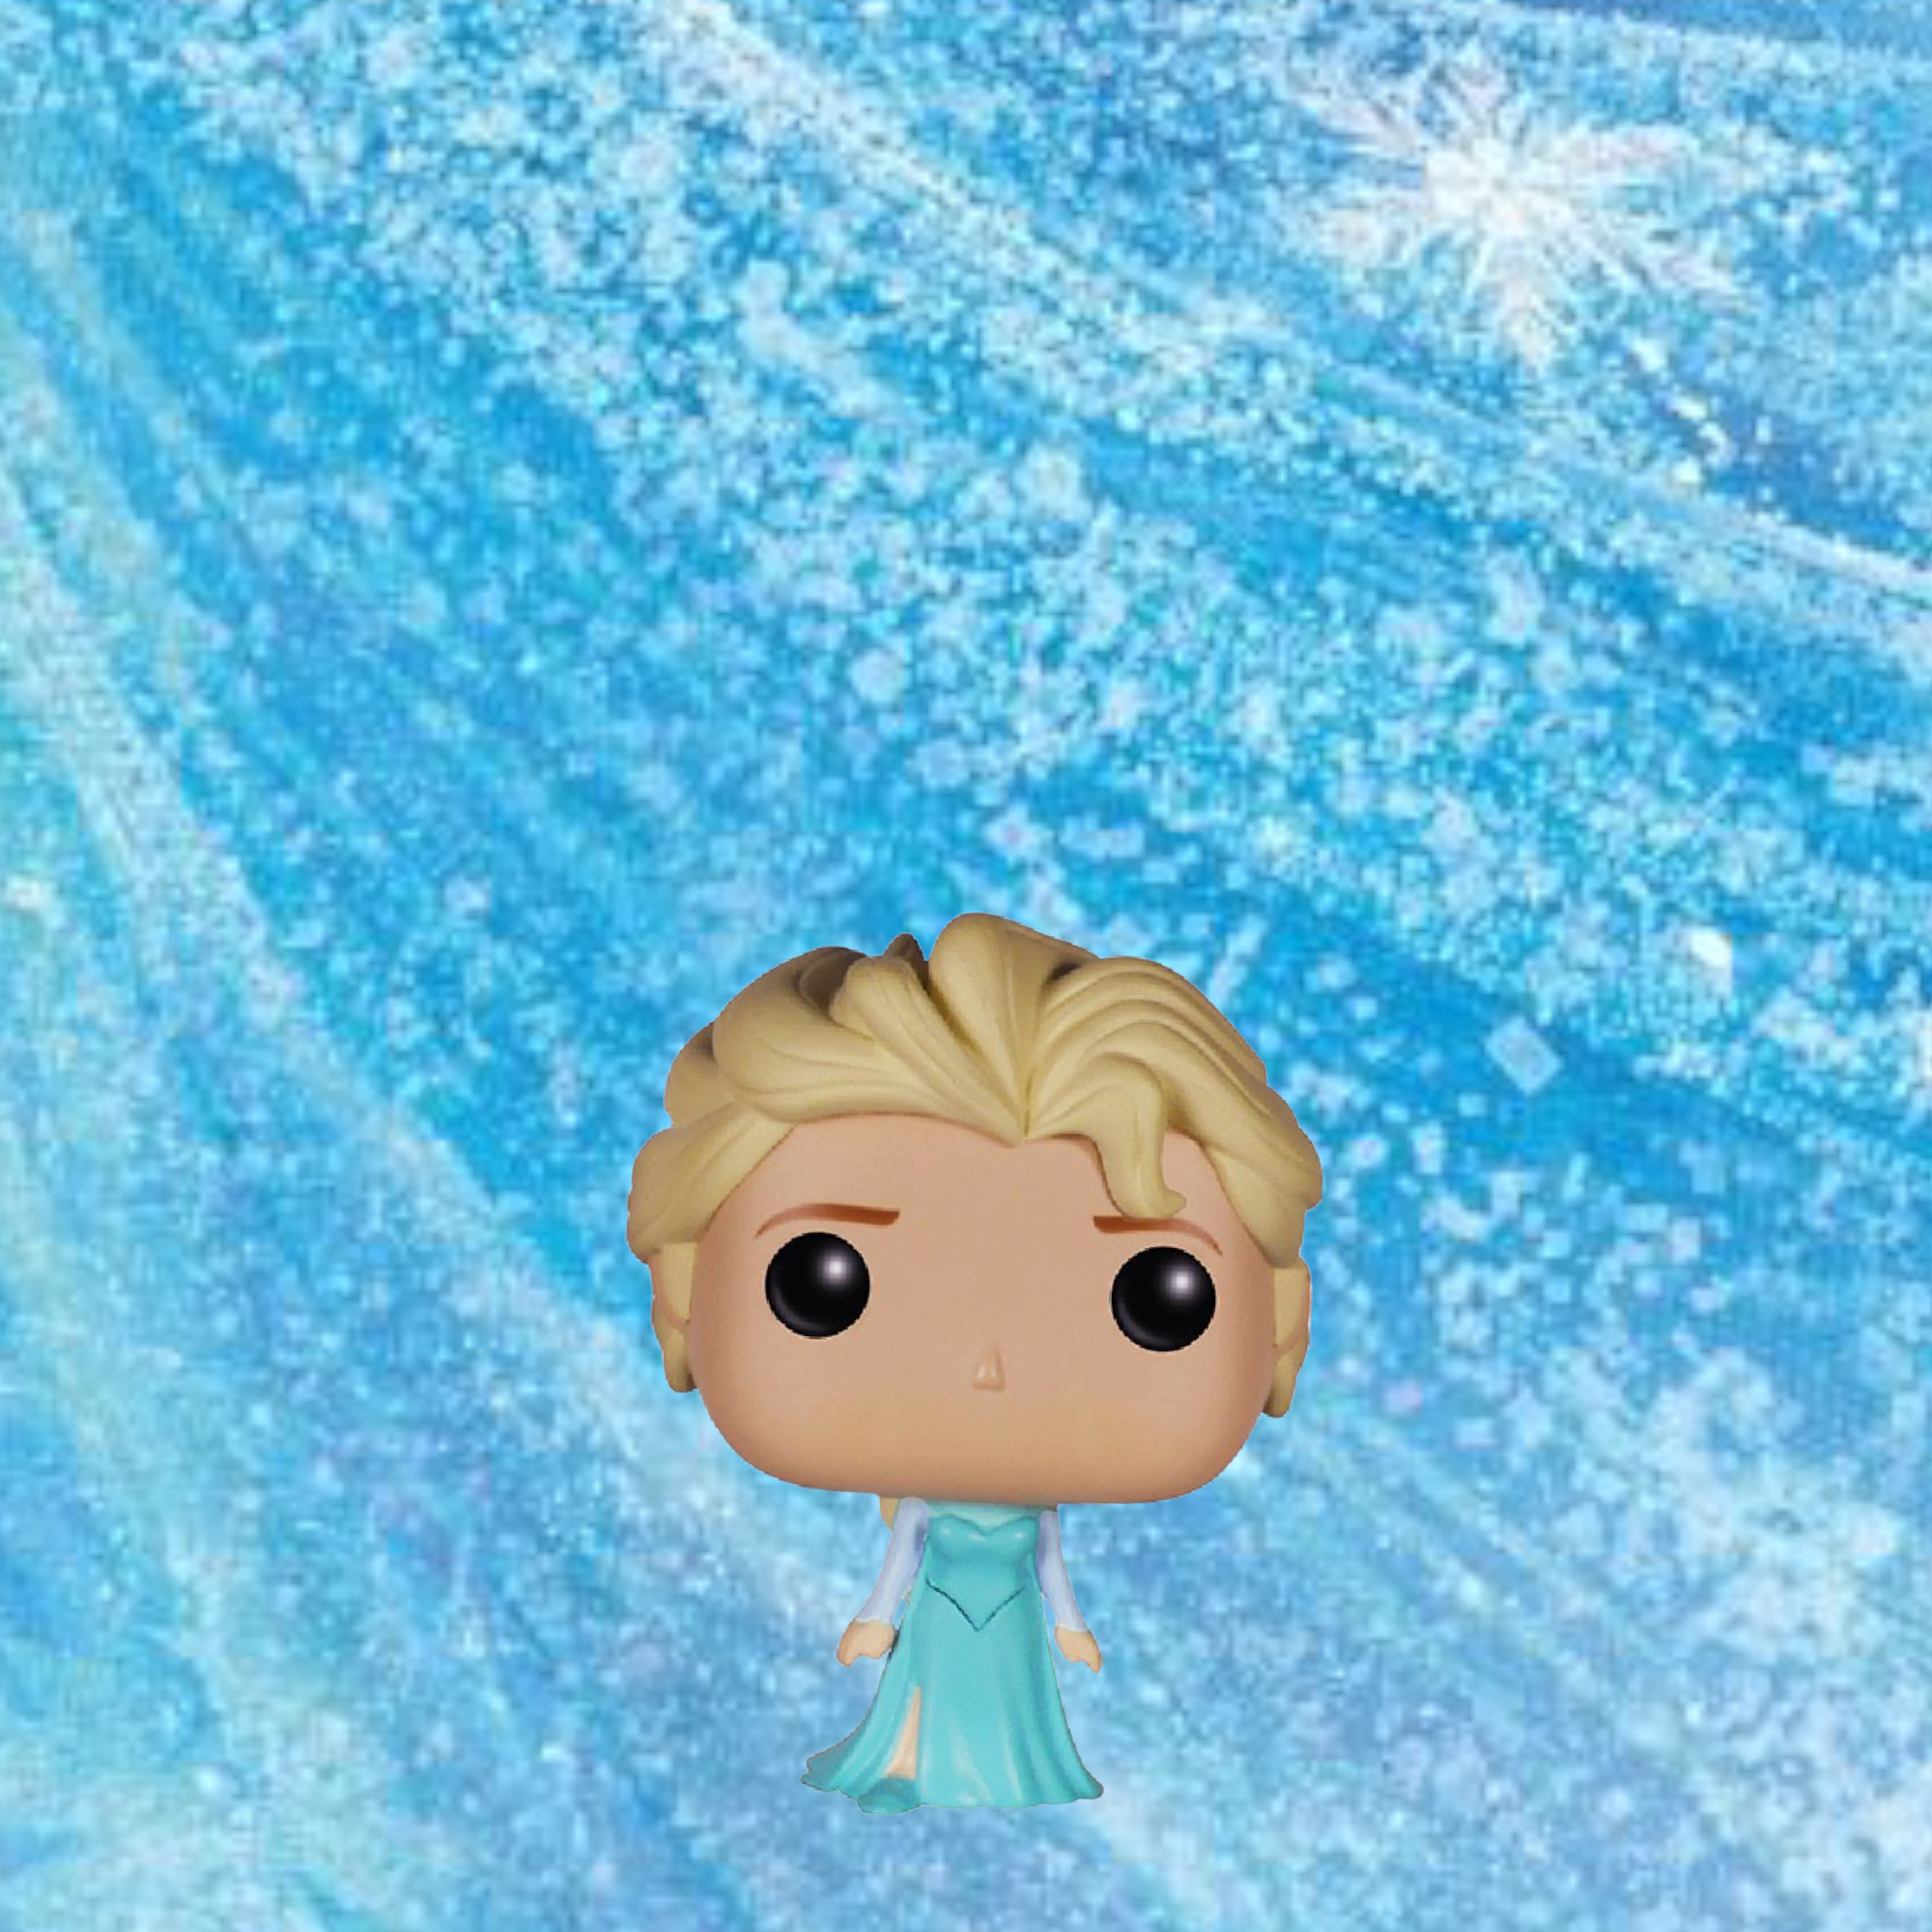 Disney - Frozen : Pocket pop Elsa